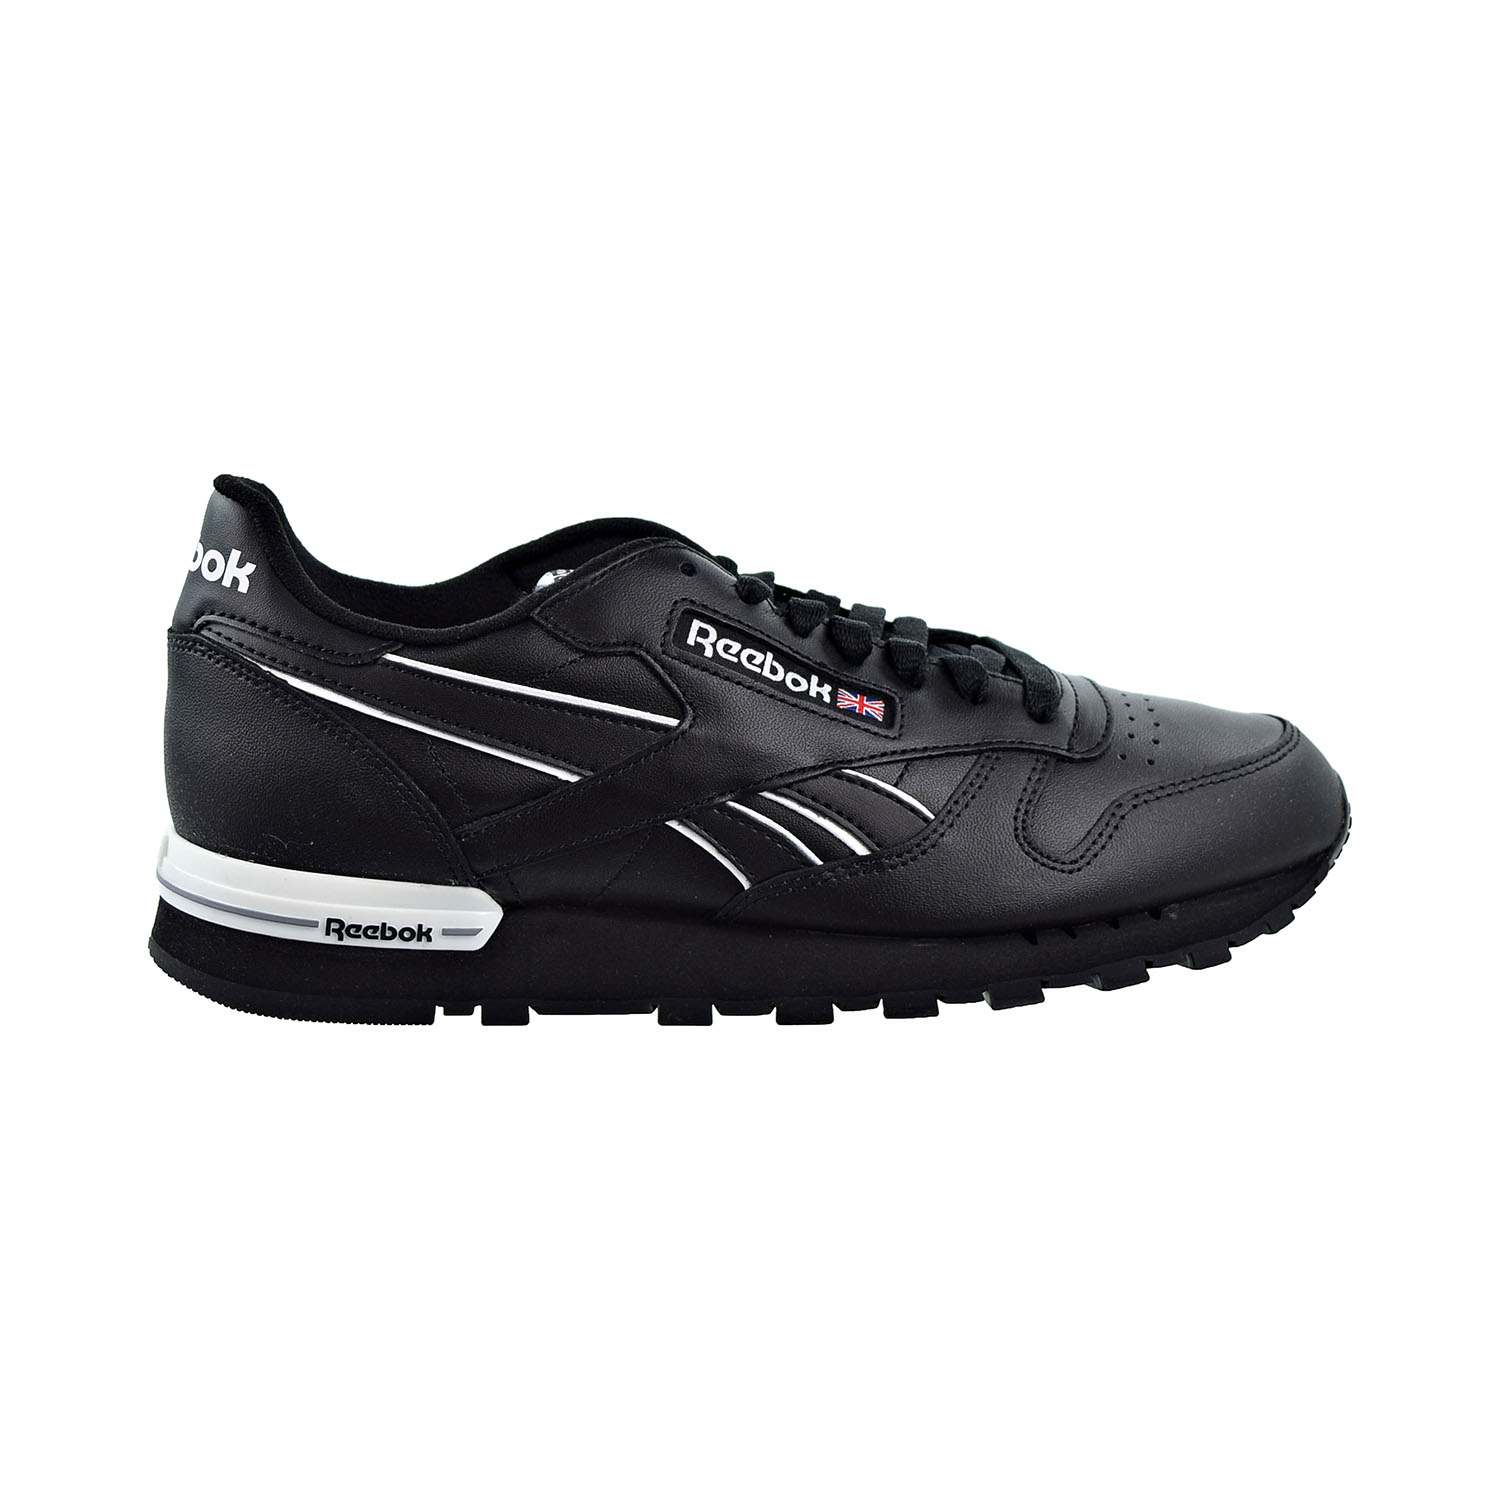 Reebok Classic Leather Men's Shoes Black/White/Cold Gray DV3931 | eBay